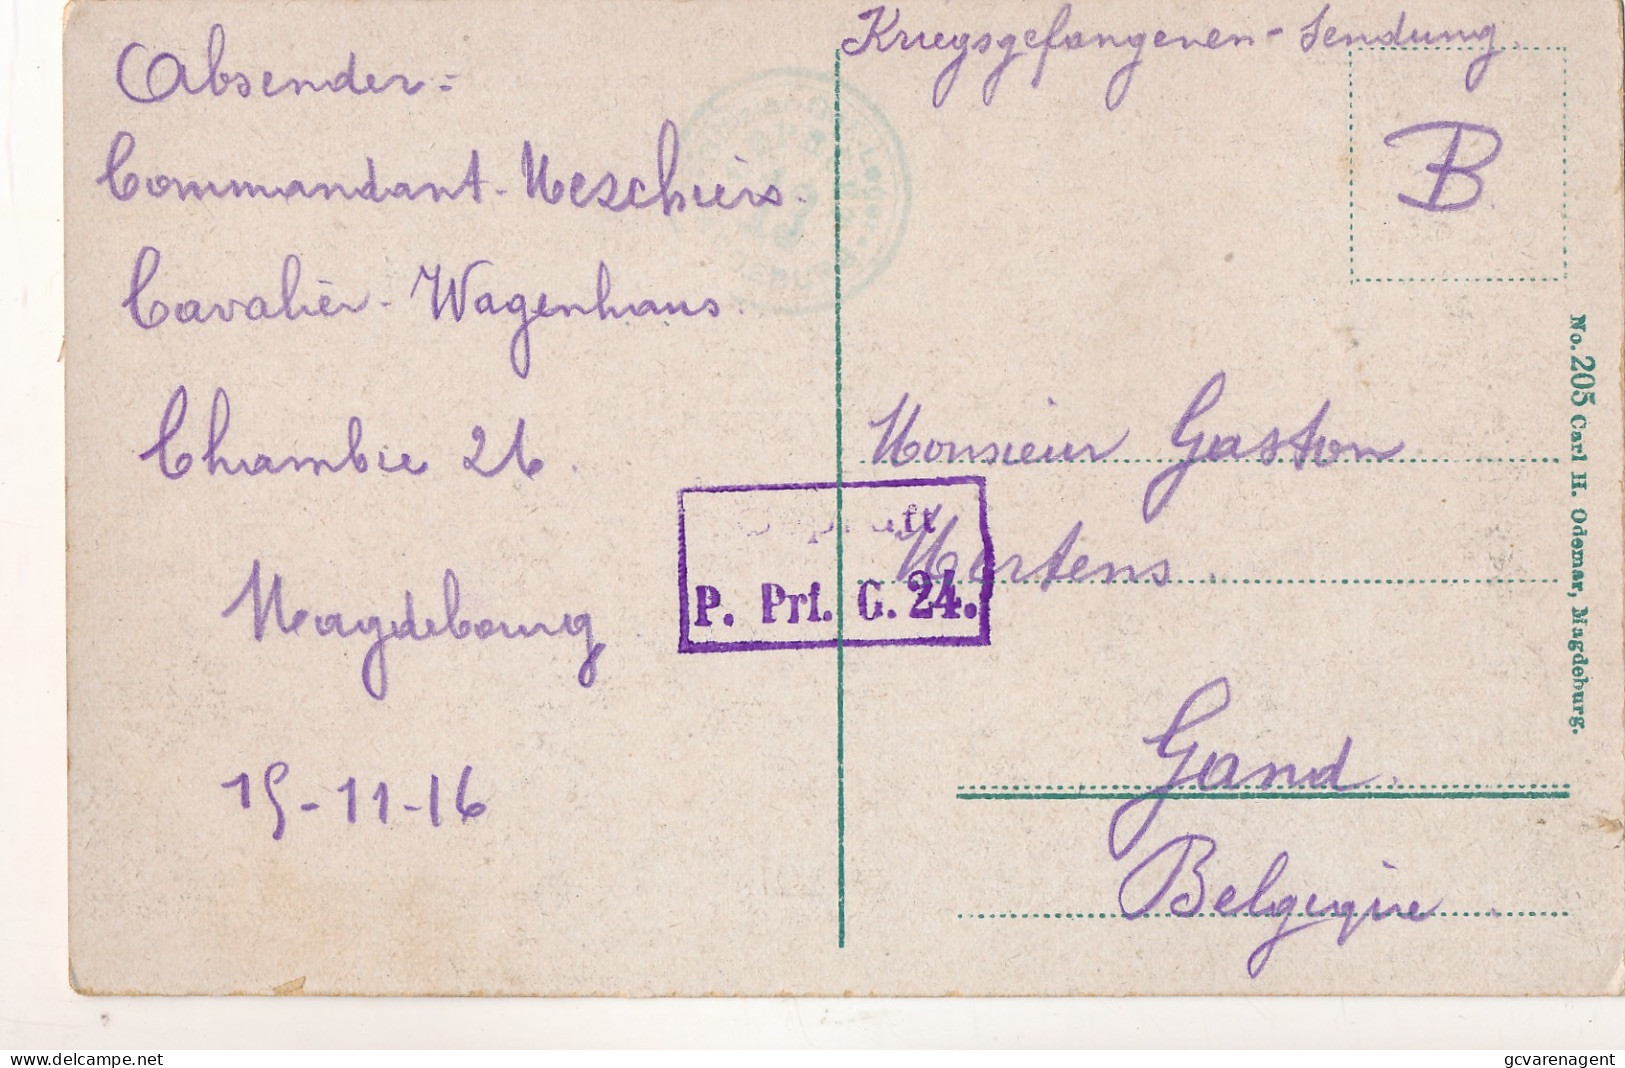 1916  COMMADANT UESCHIERS CAVALIER WAGENHAUS CHAMBRE 26 MAGDEBOURG TO GAND BELGIUM      2  SCANS - Kriegsgefangenschaft